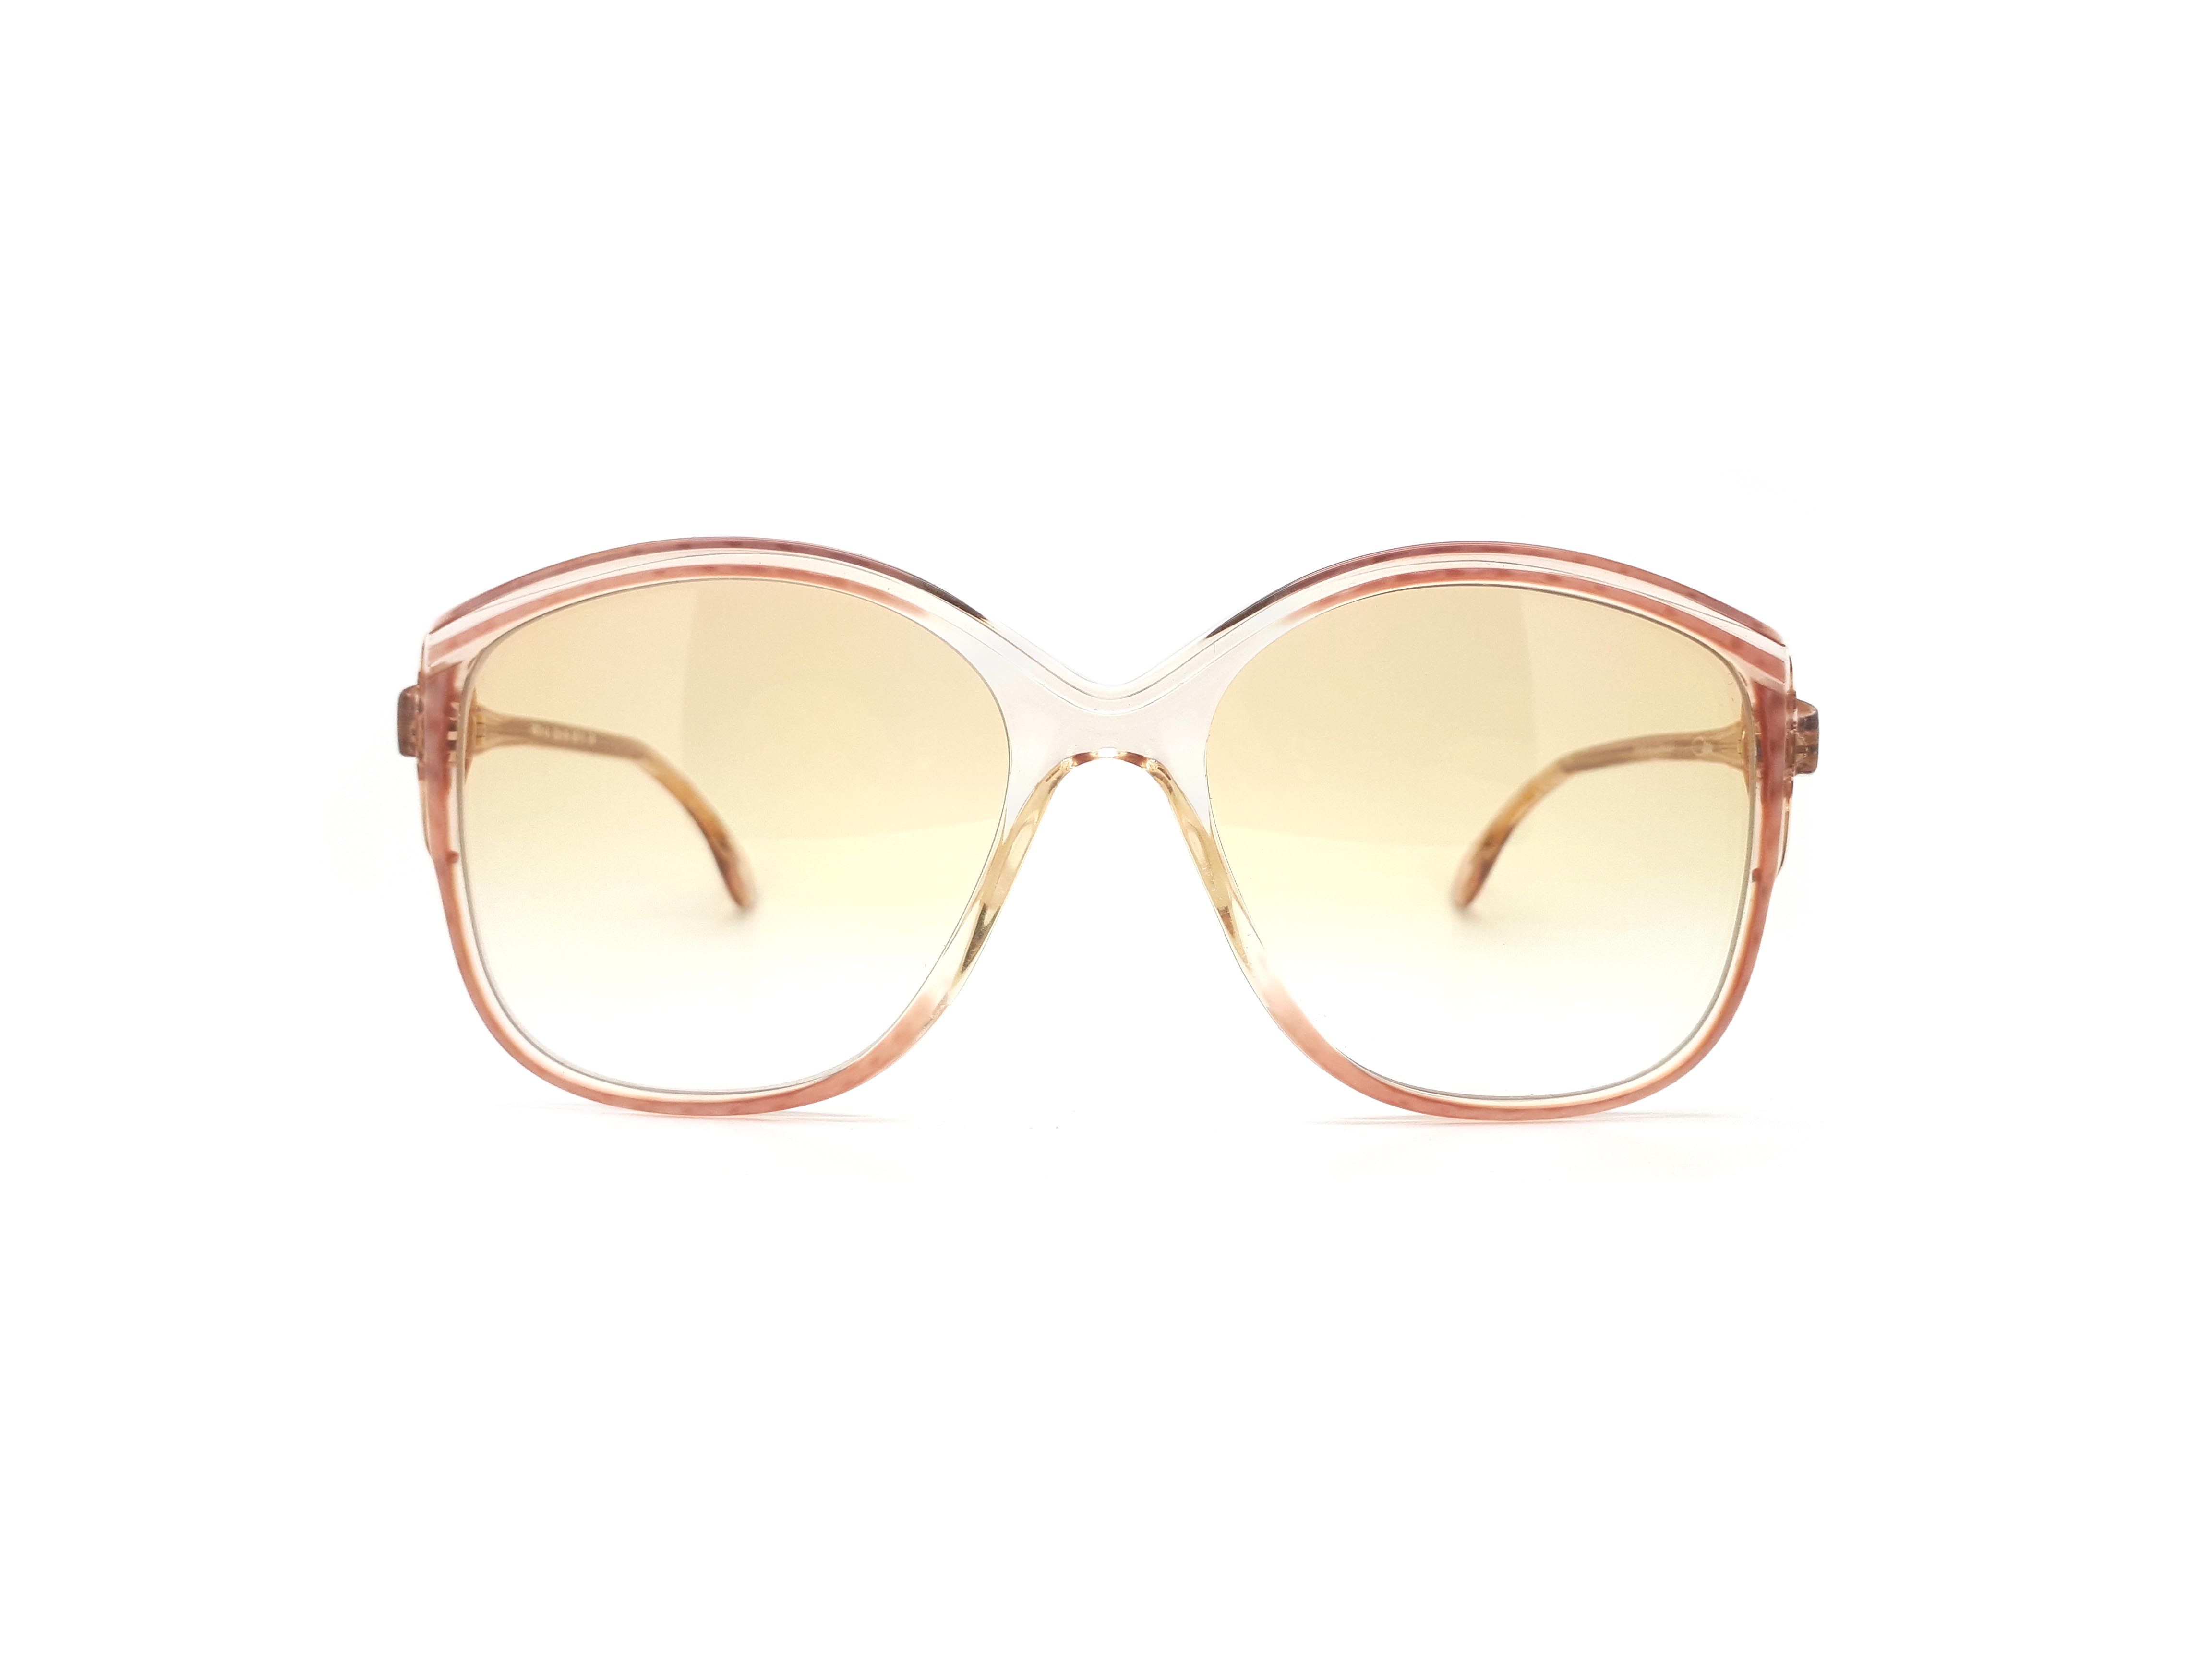 Cazal - Vintage 5002 - Legendary - Smoke Blue Gold - Optical Glasses -  Cazal Eyewear - Avvenice